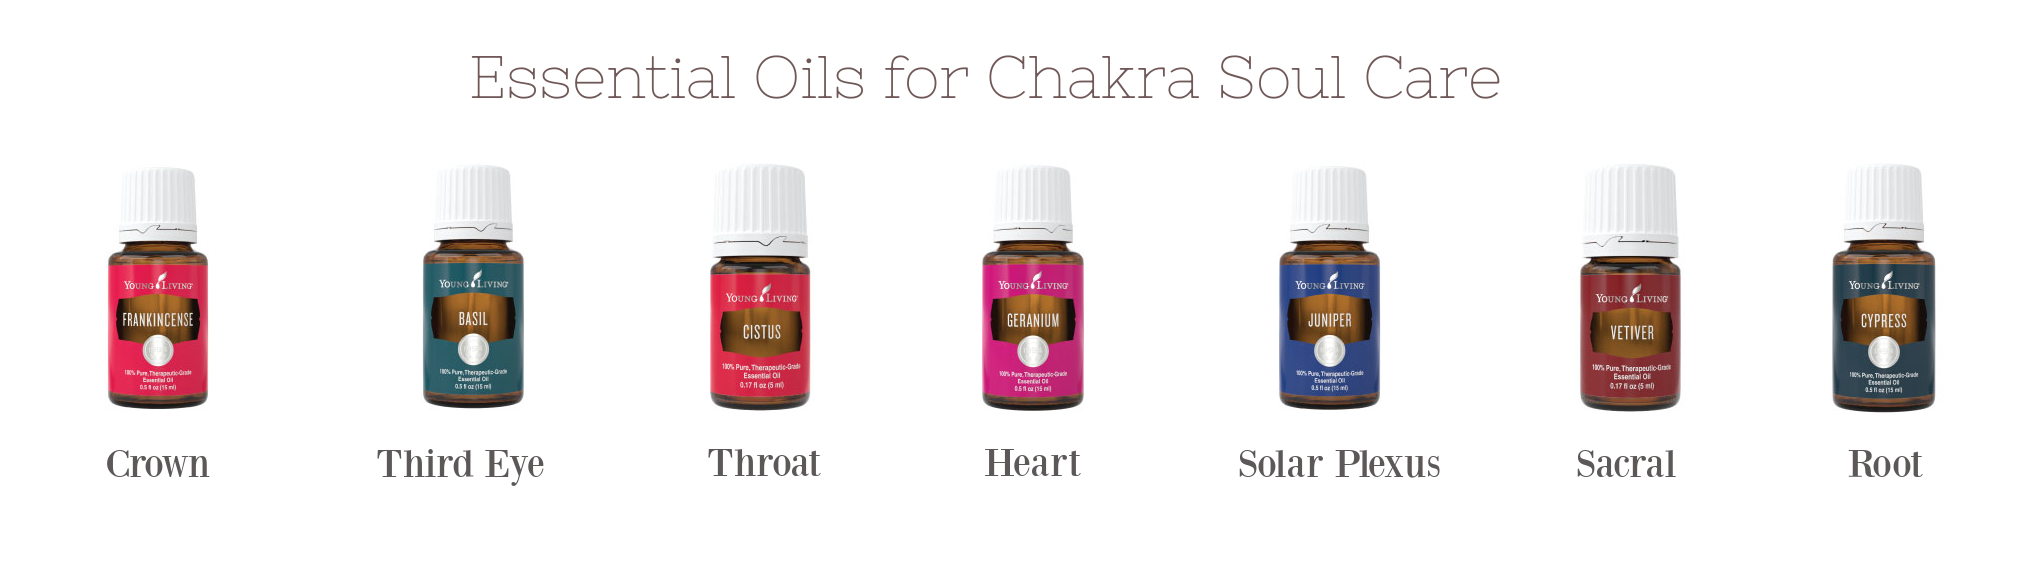 Essential Oils for Chakras